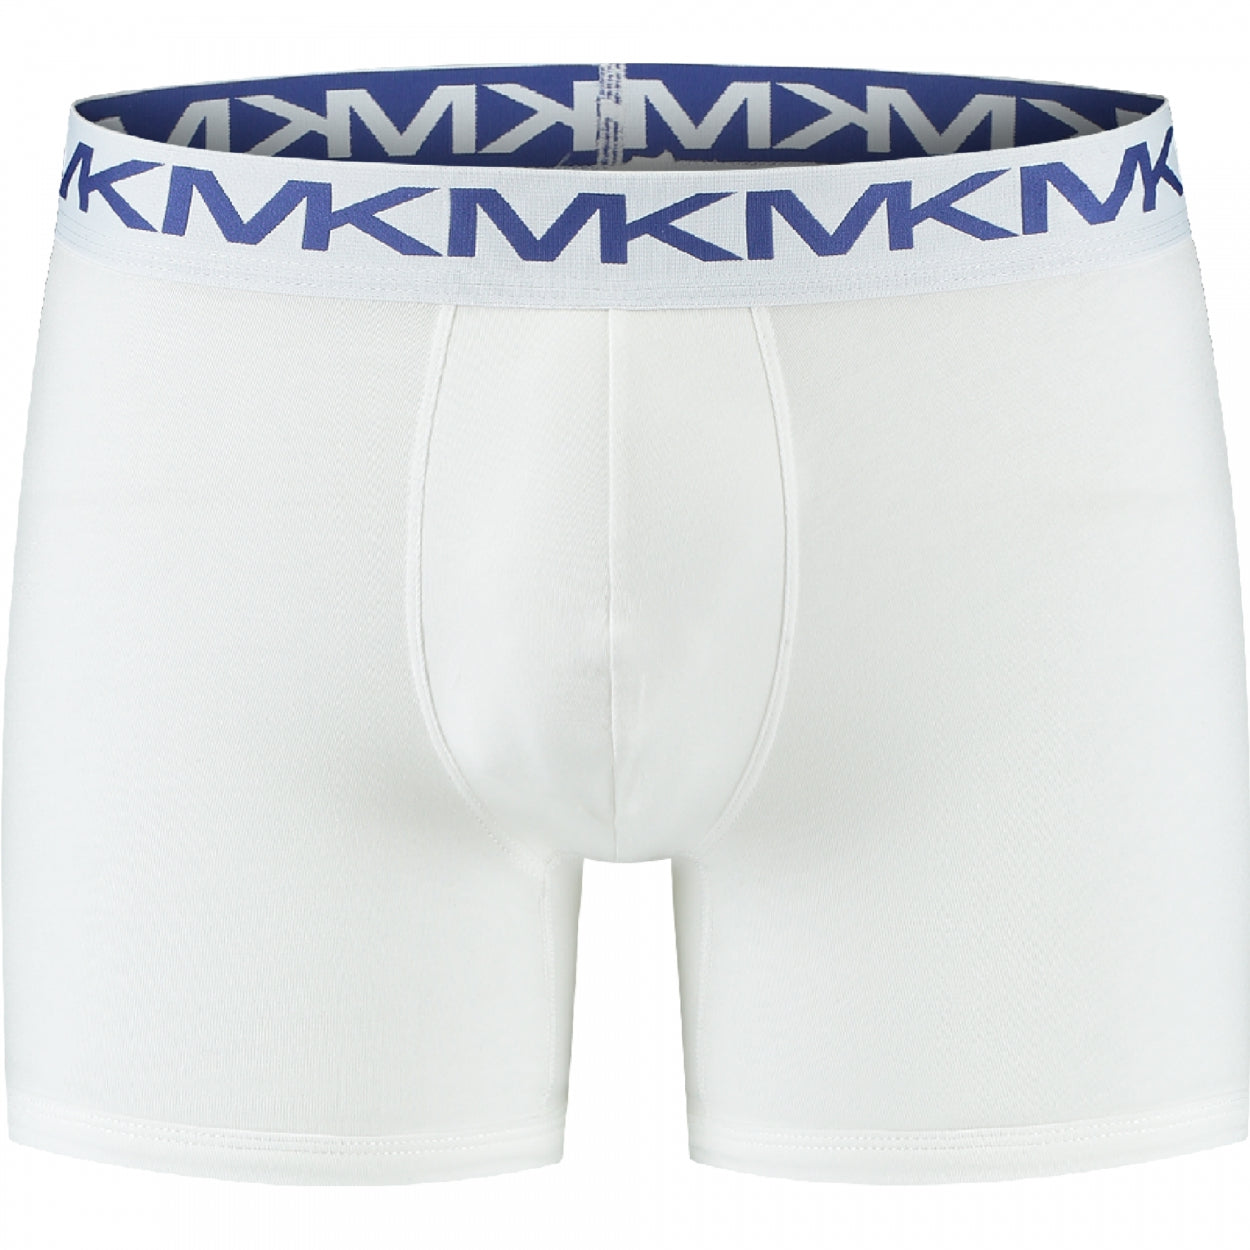 Michael Kors Classic White Boxers (3 Pack)